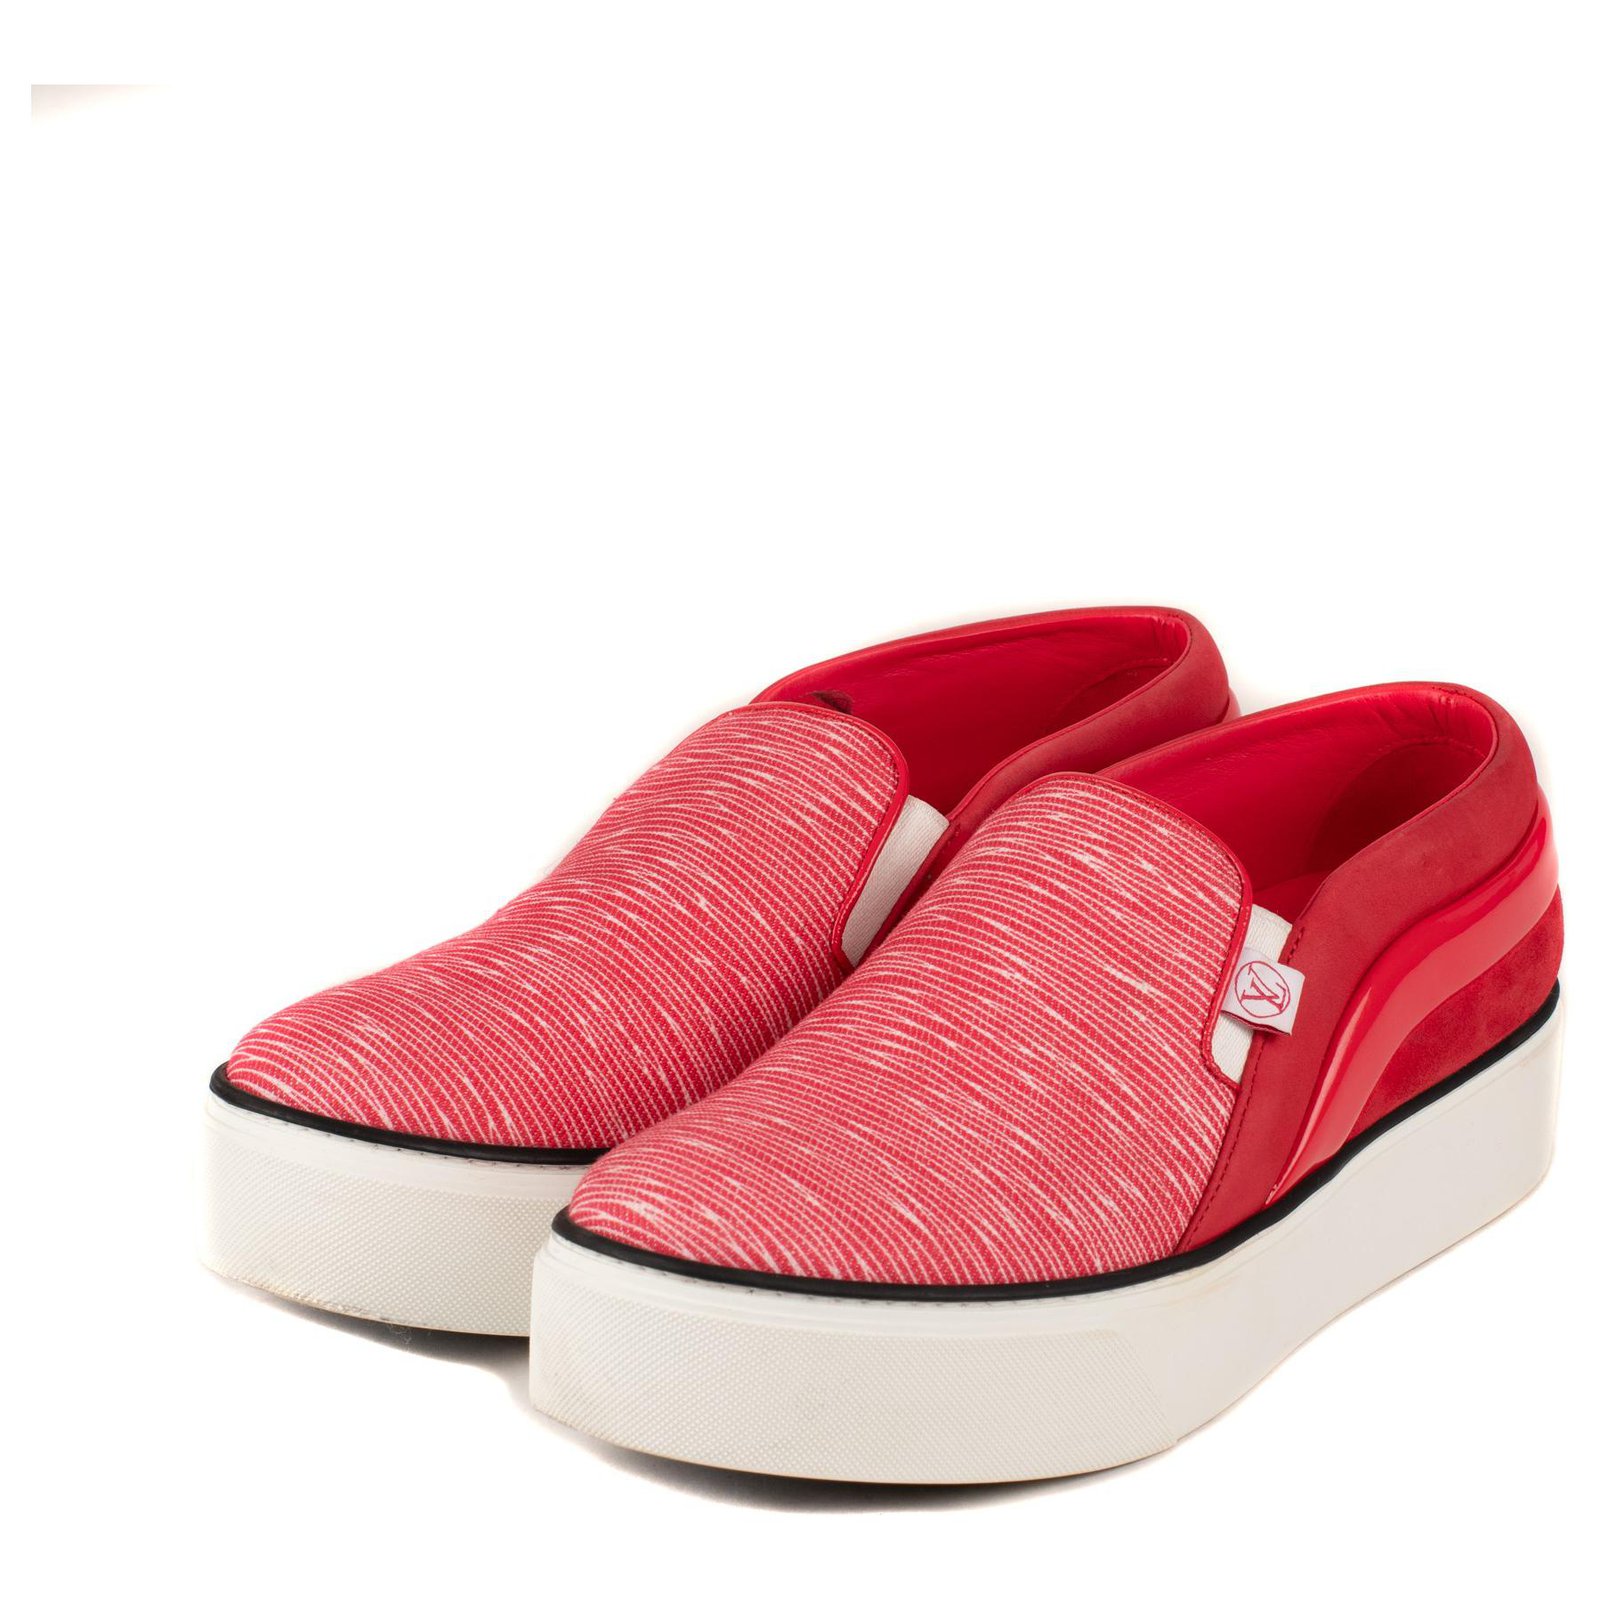 Louis Vuitton sneakers model Catwalk sneaker raspberry color